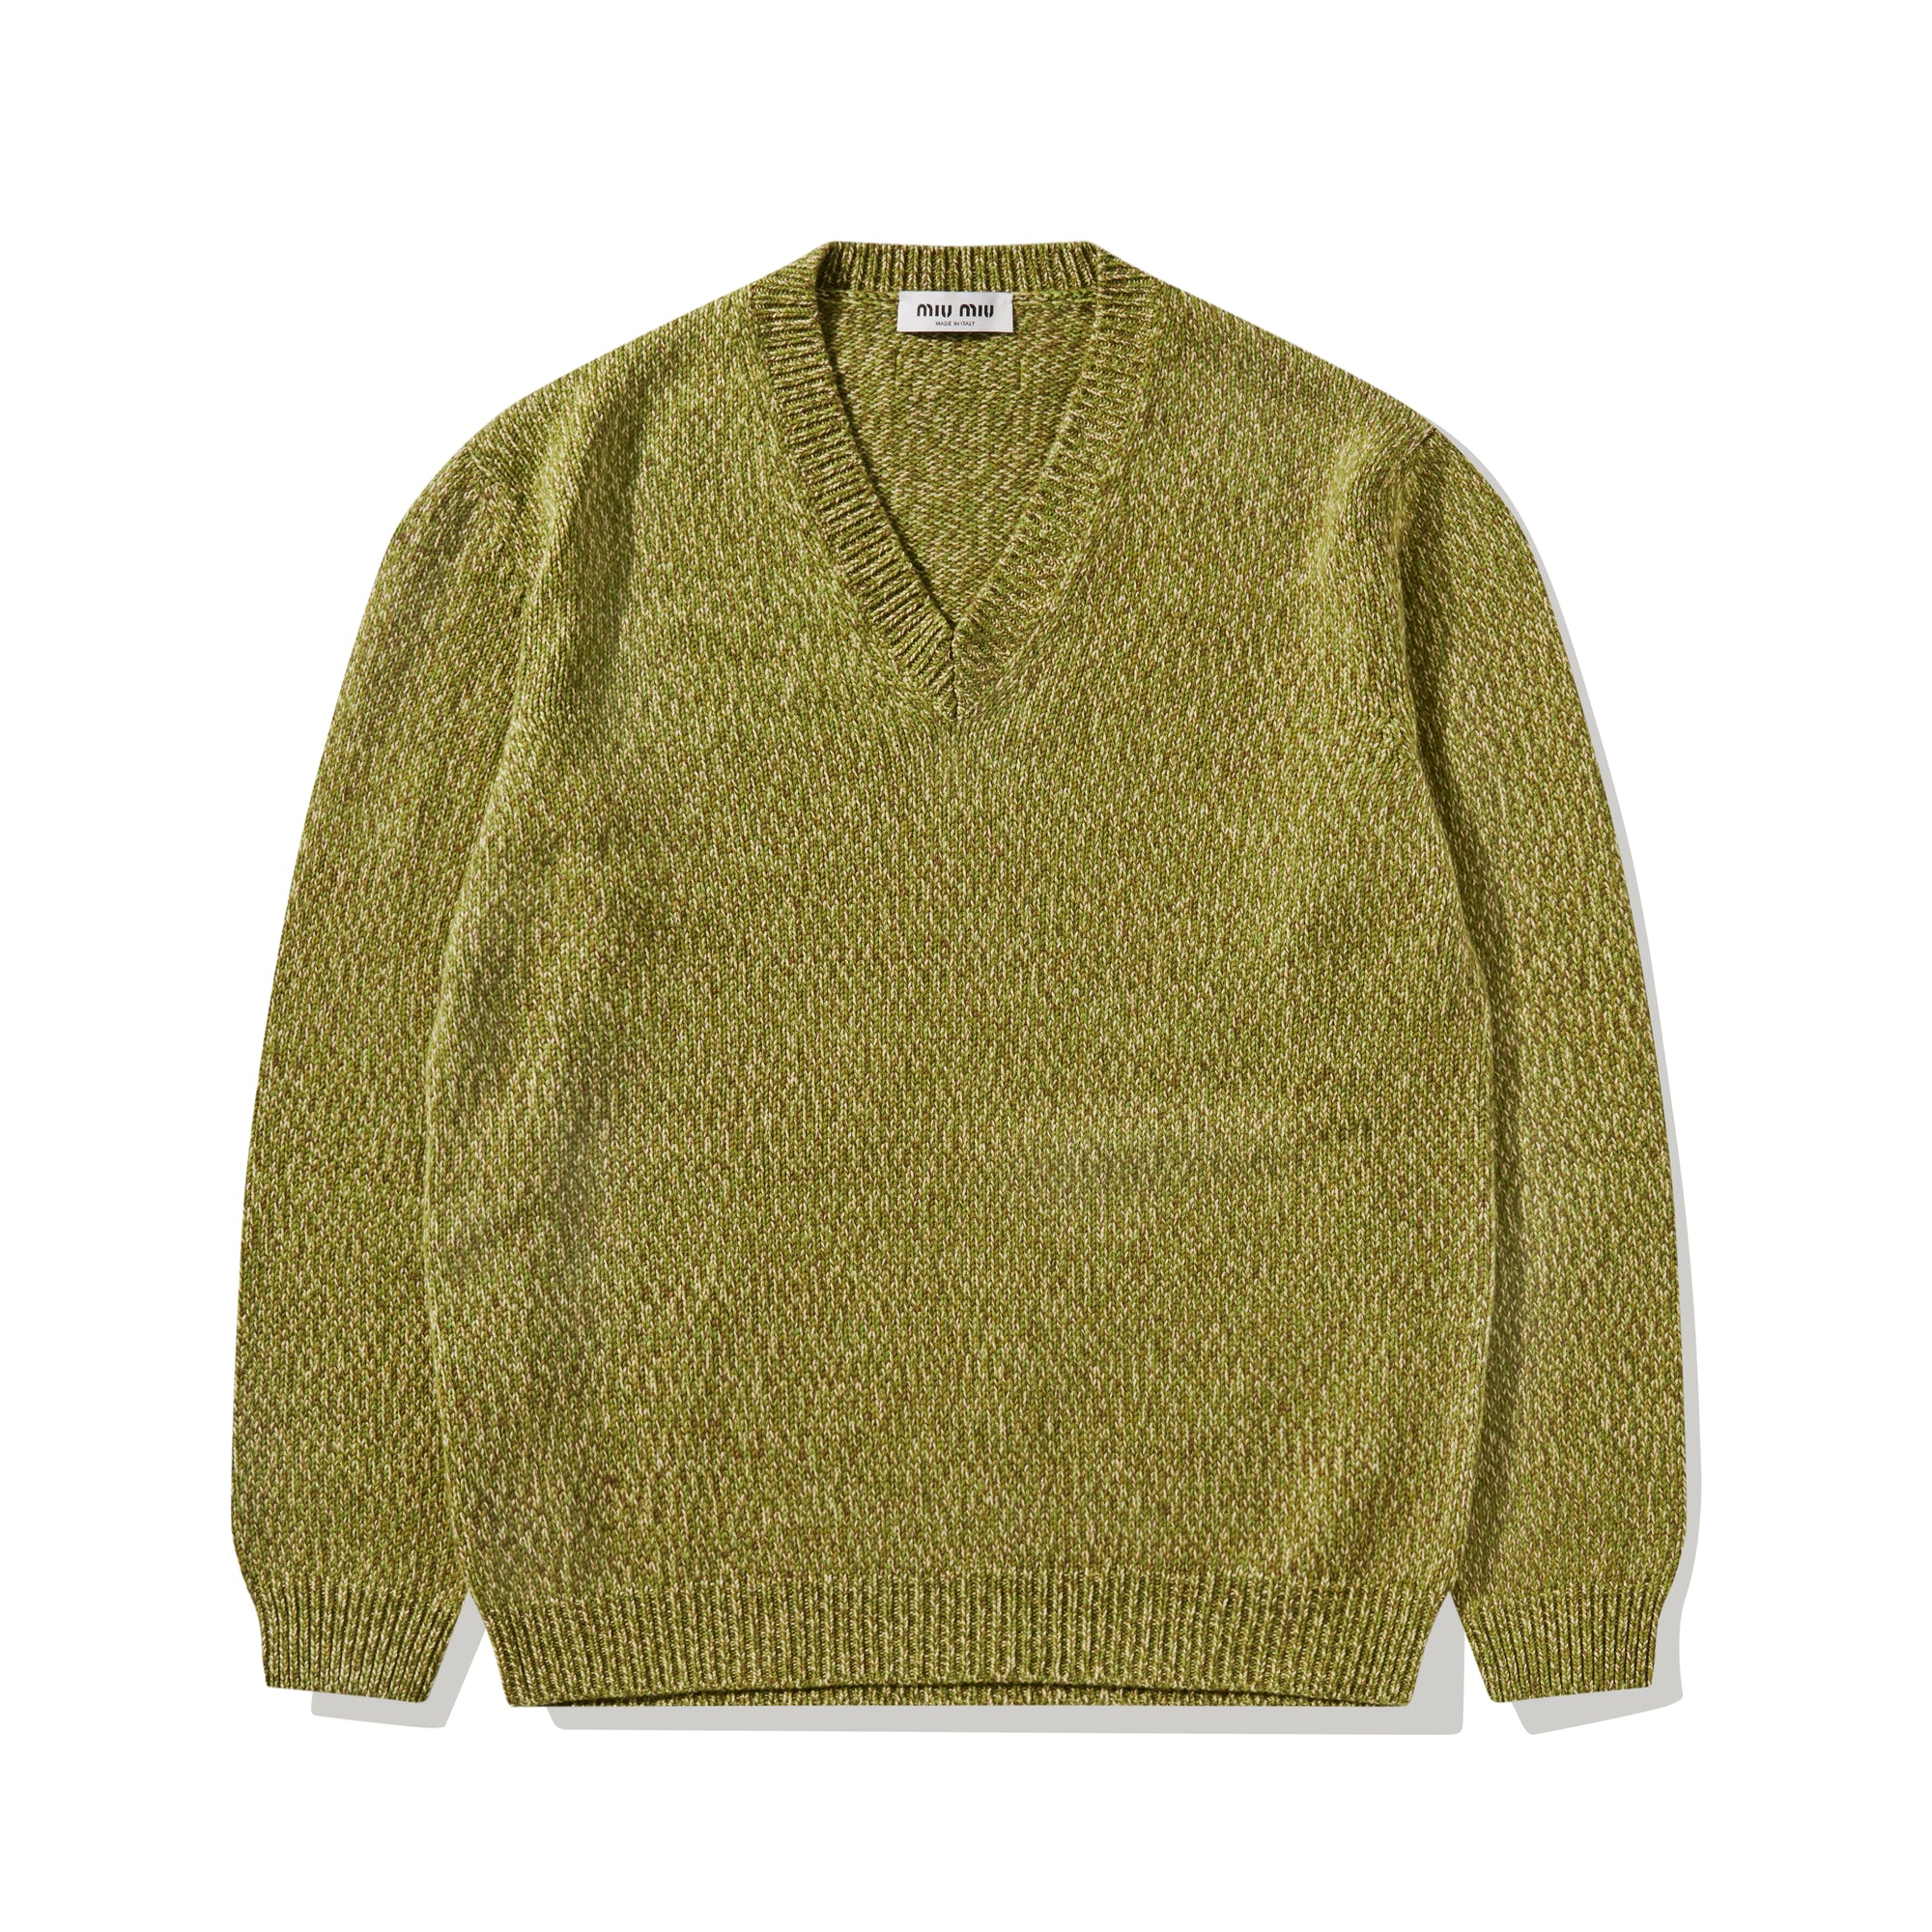 Miu Miu - Women's Wool And Cashmere Sweater - (Fern Green) view 1